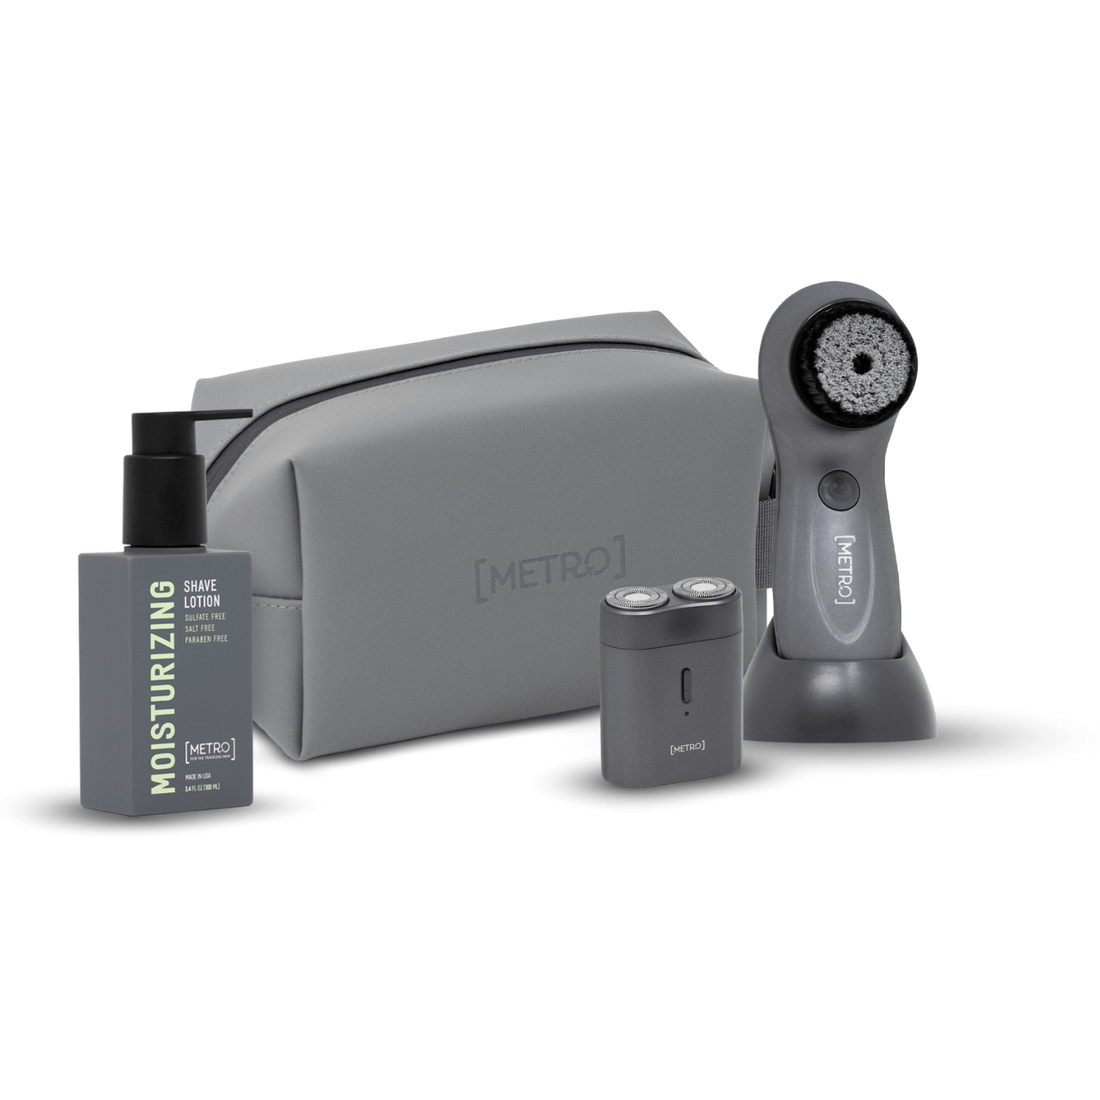 Cortex Beauty MetroMan 100ML Moisturizing Shave Lotion &amp; Waterproof Electric USB Shaver Bundle | Bag &amp; Round Trip Waterproof USB Facial Brush Included